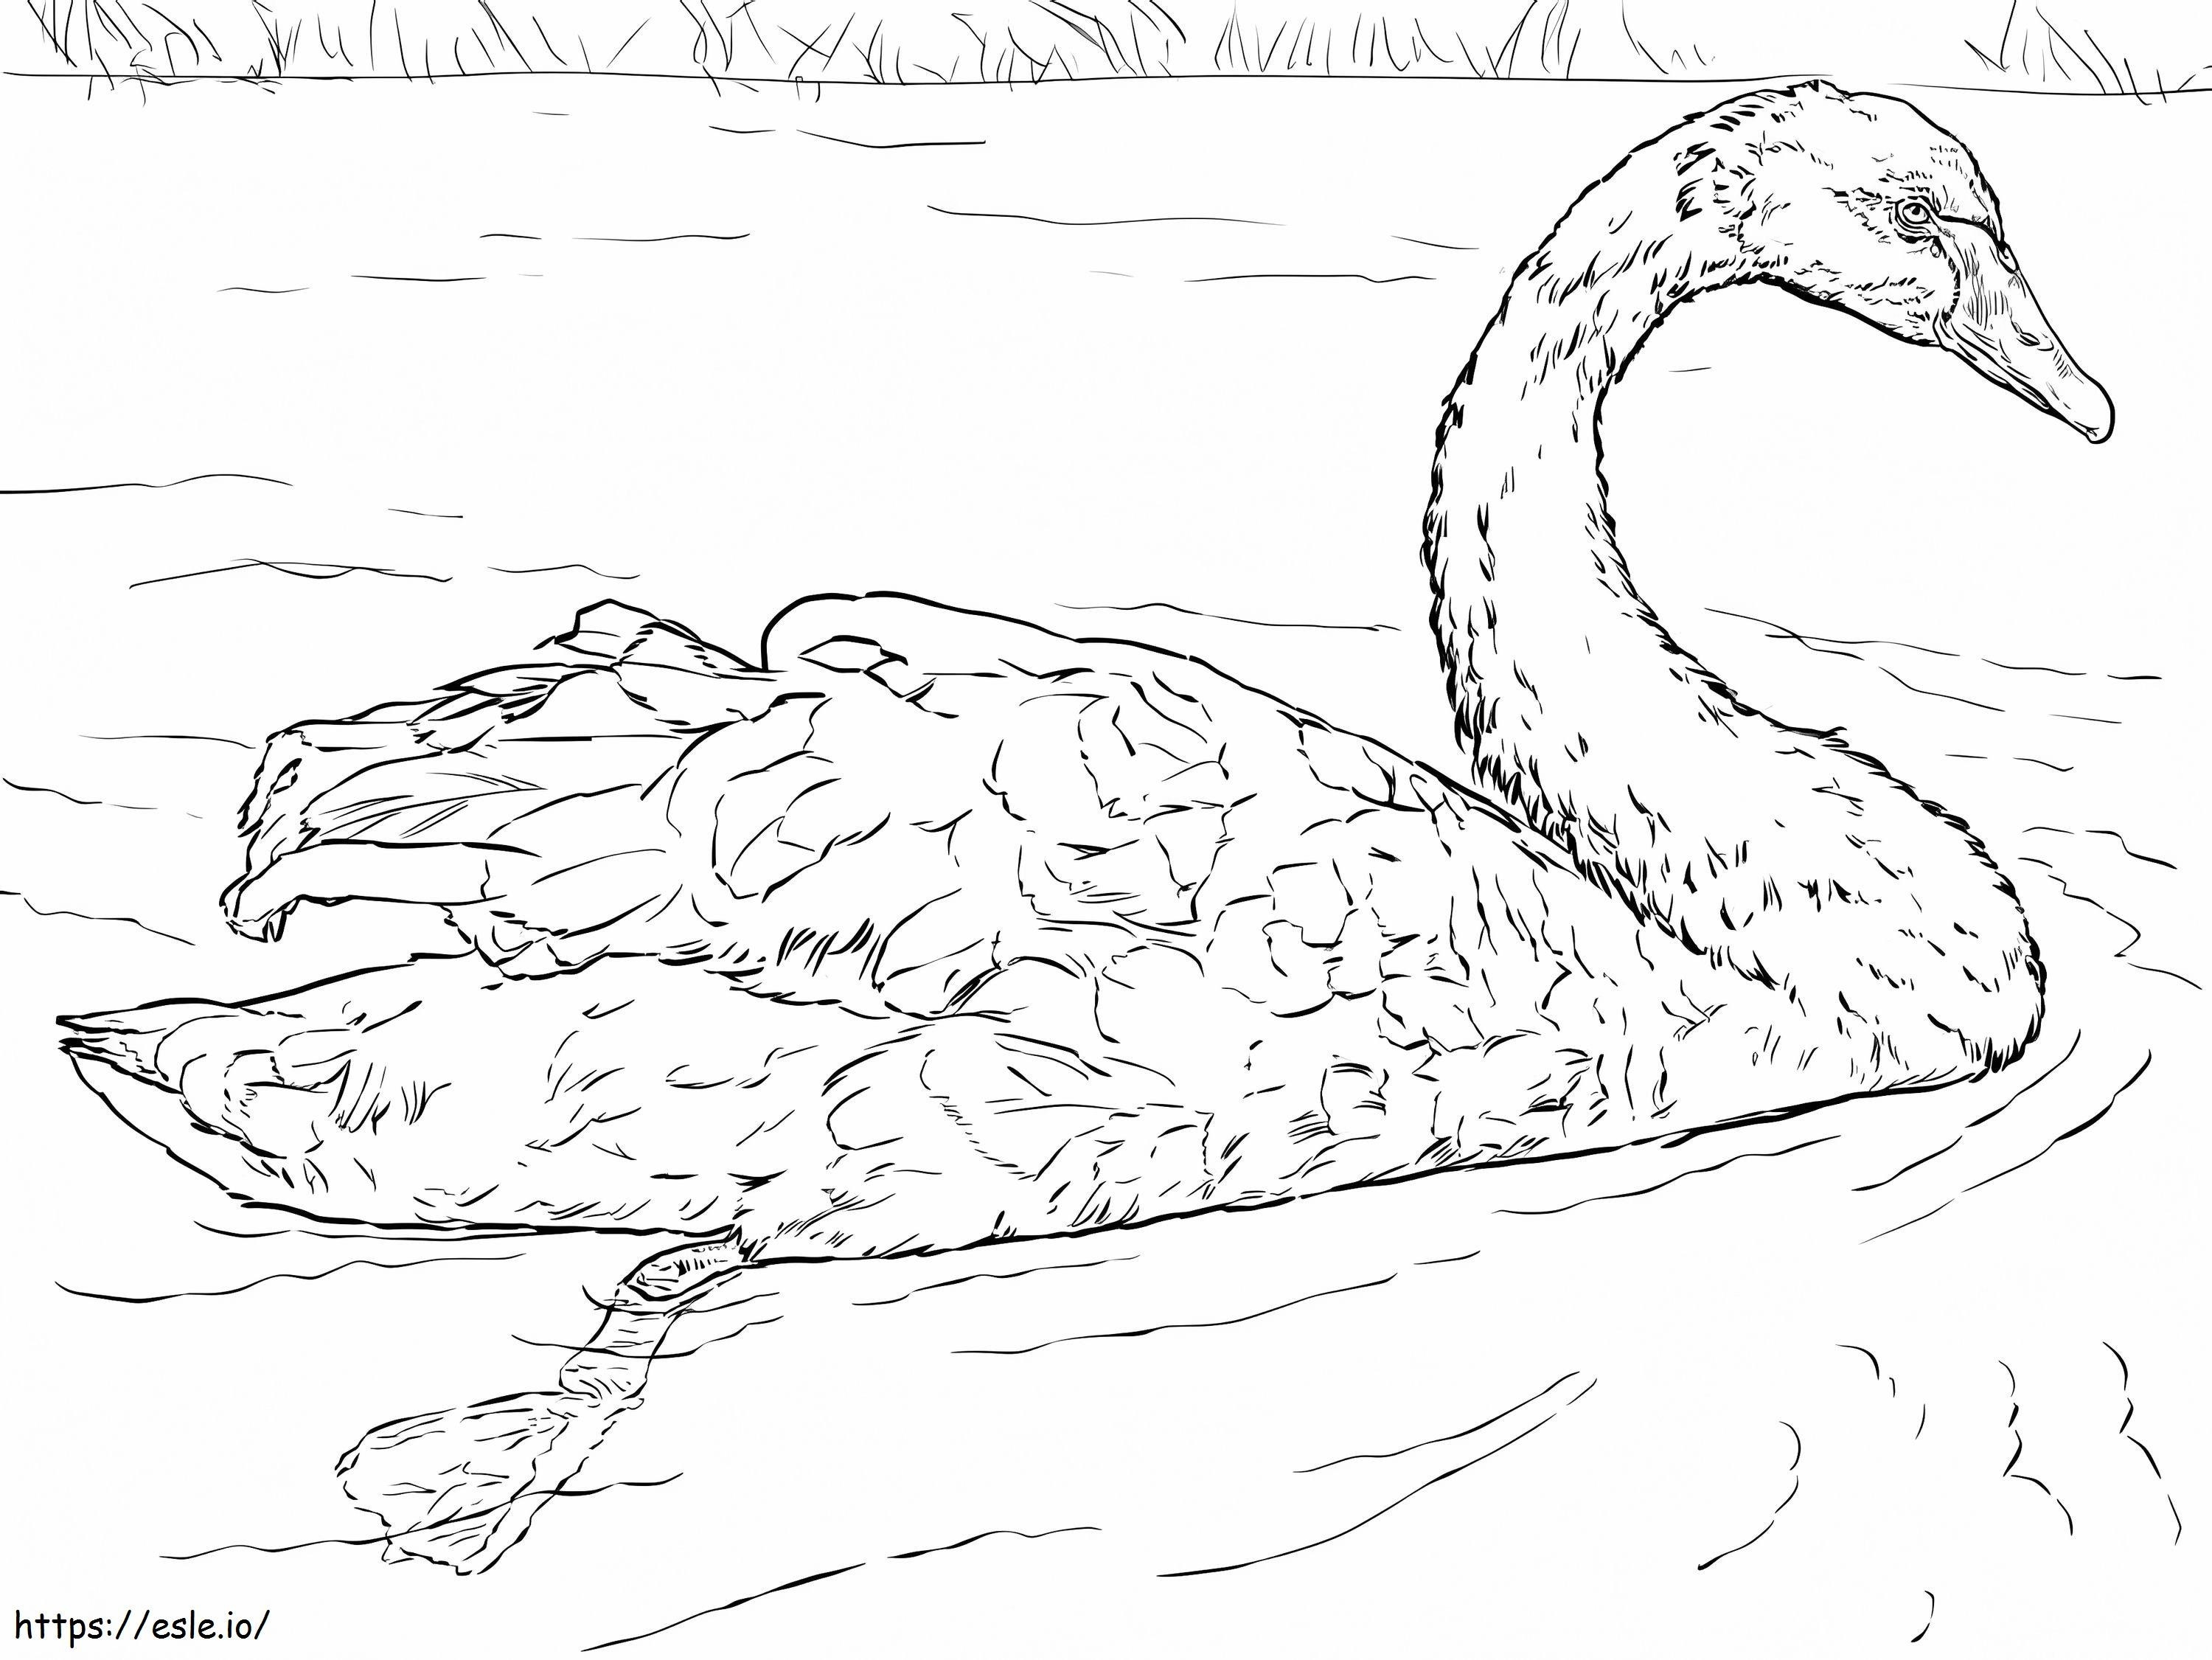 Black Swan coloring page